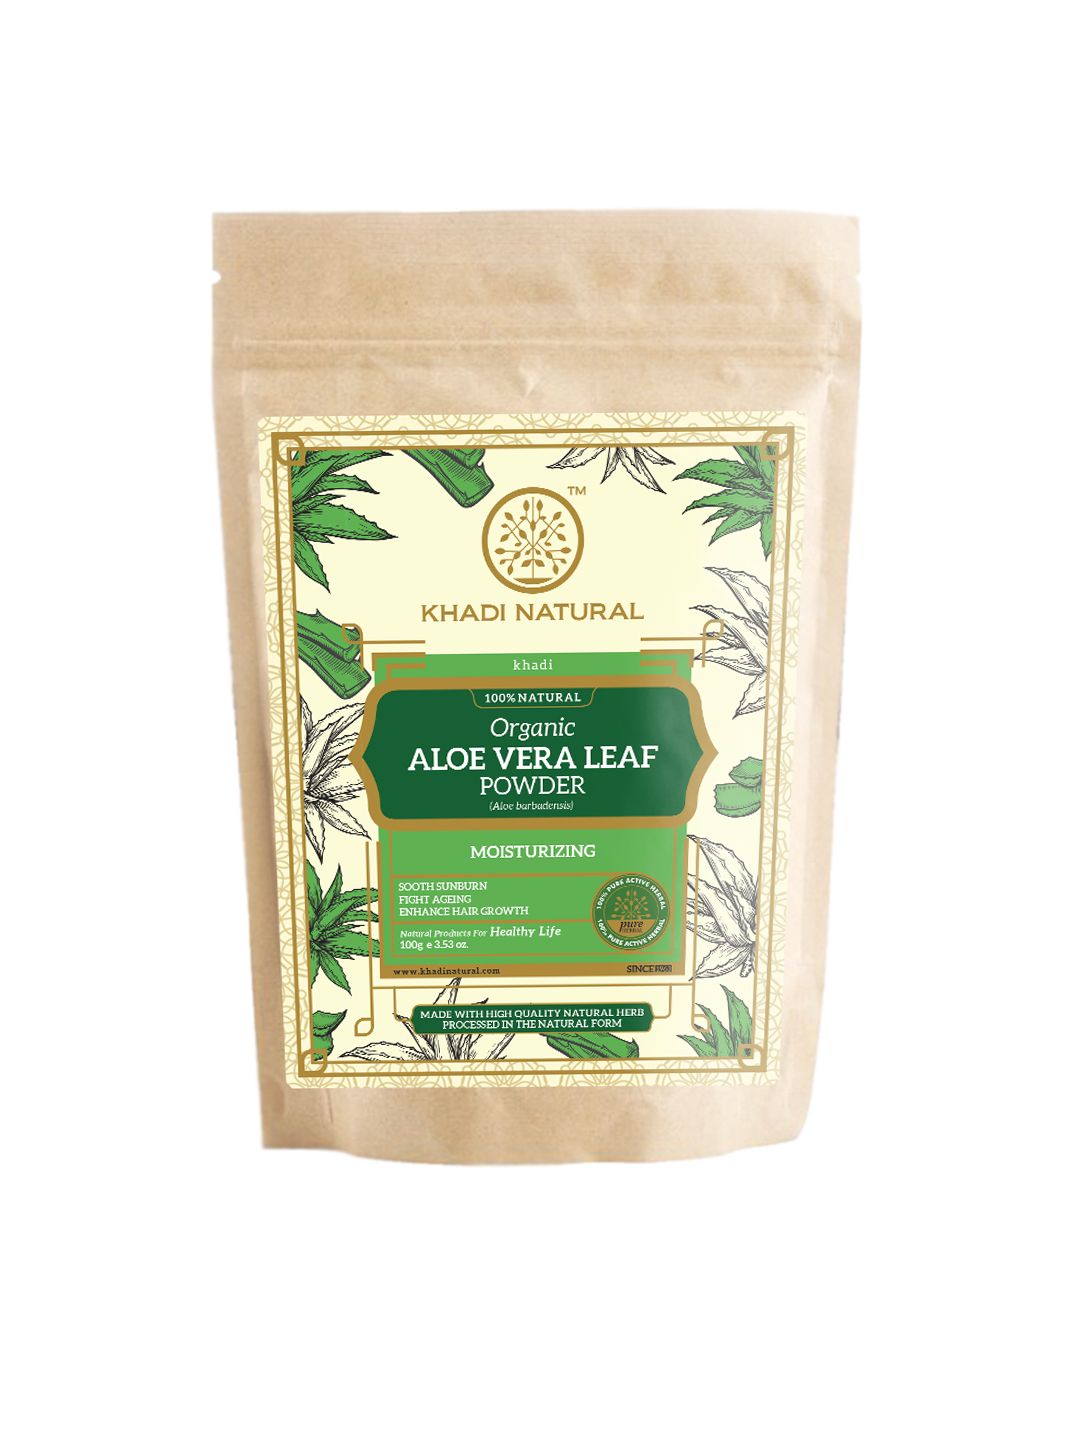 Khadi Natural Herbal Aloevera Leaf organic Powder- 100g Price in India